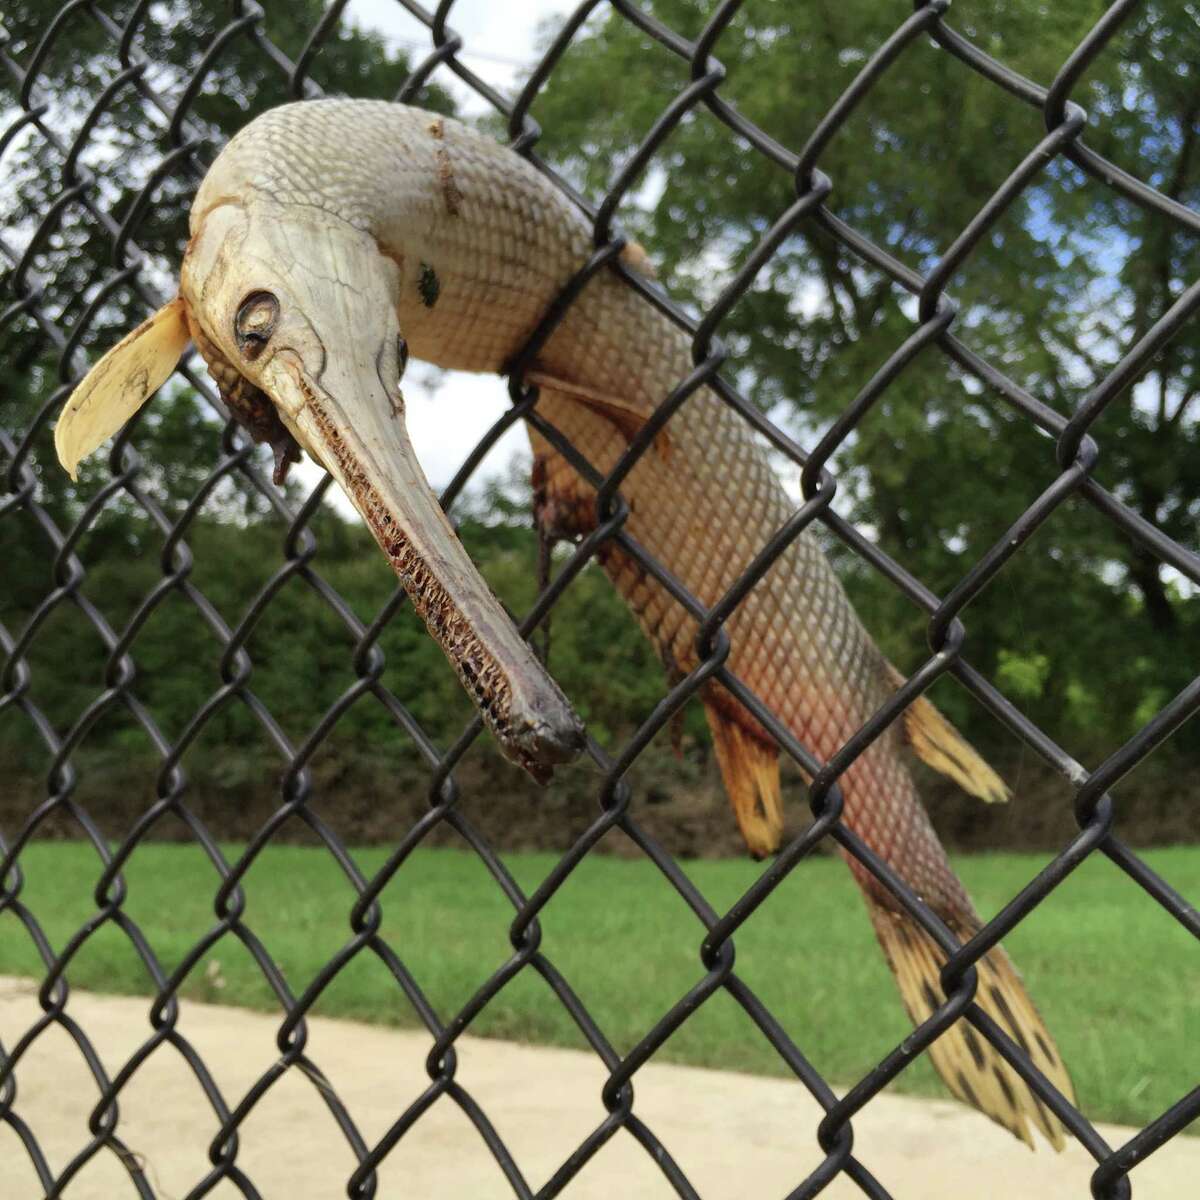 Longnose gar stuck in a chain-link fence in Dallas, Texas.